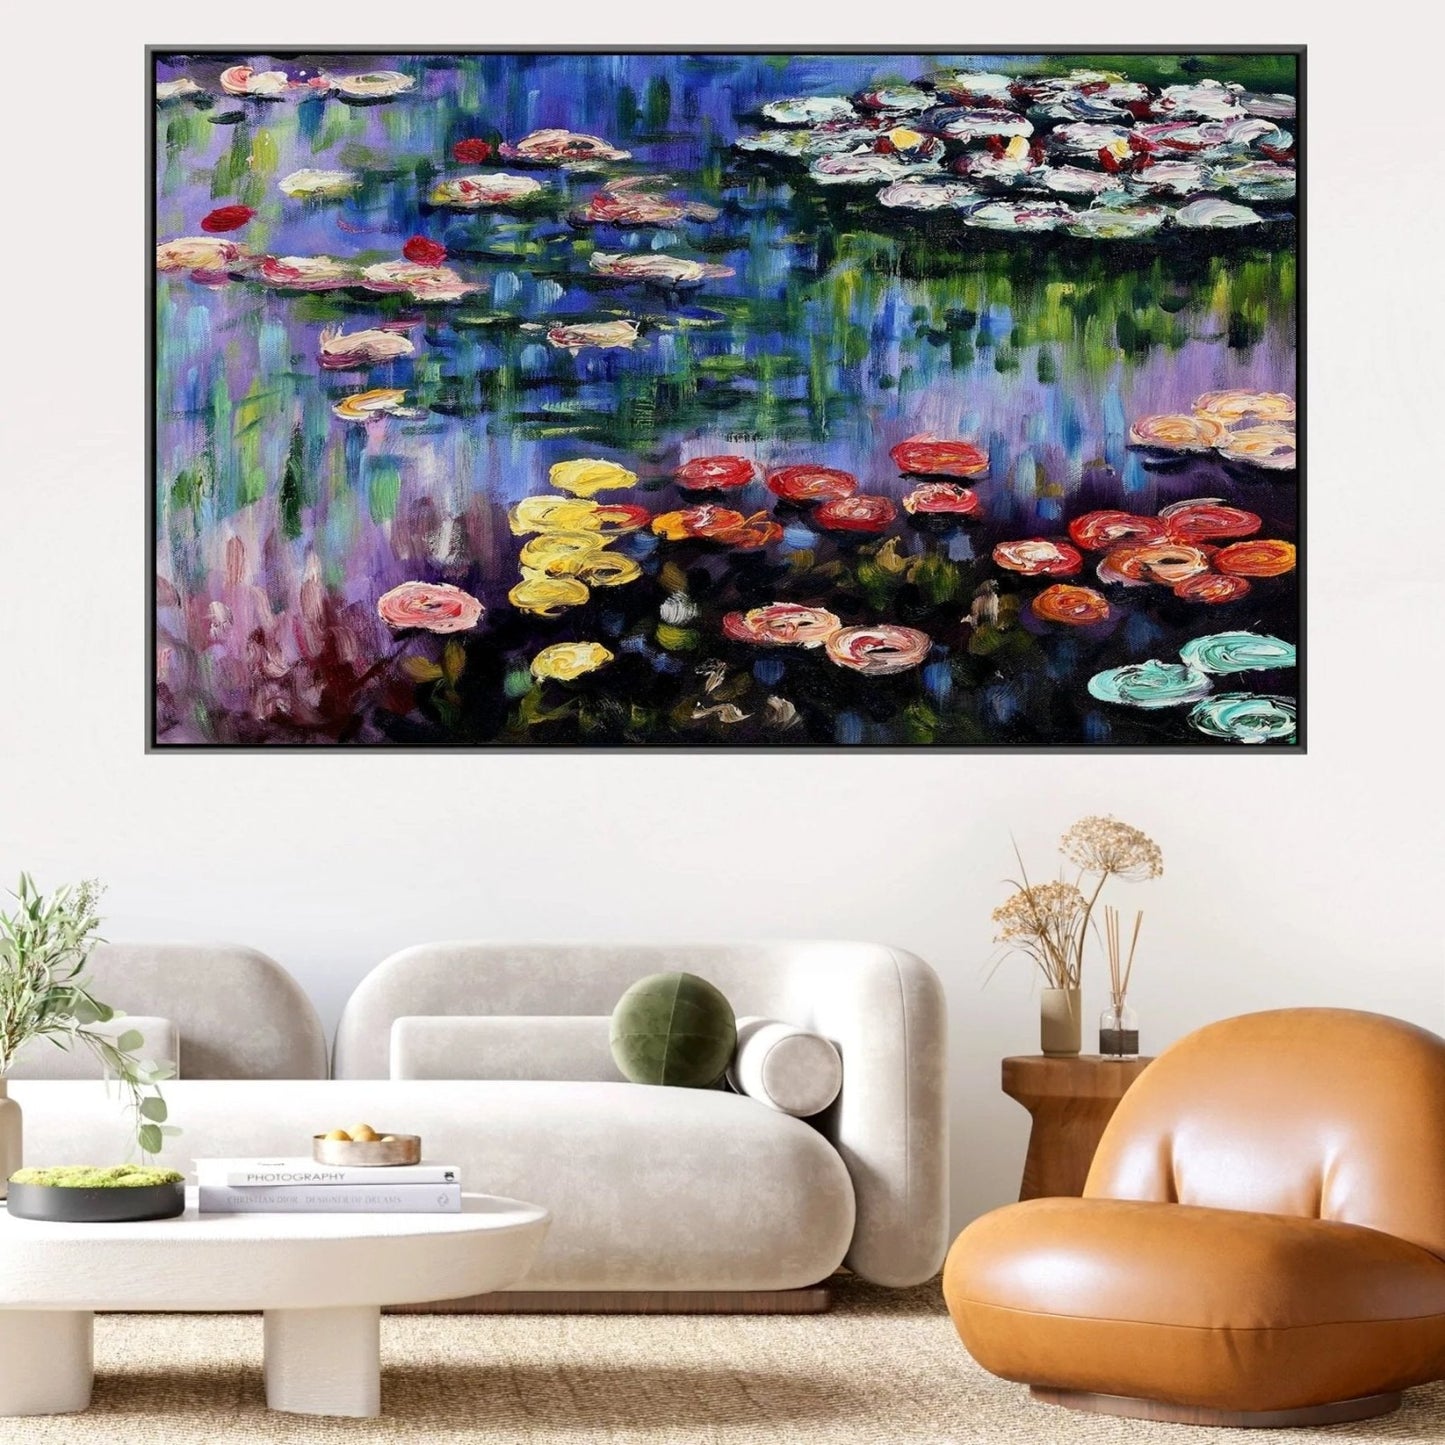 Nymphéas dans l'étang de Giverny - Claude Monet